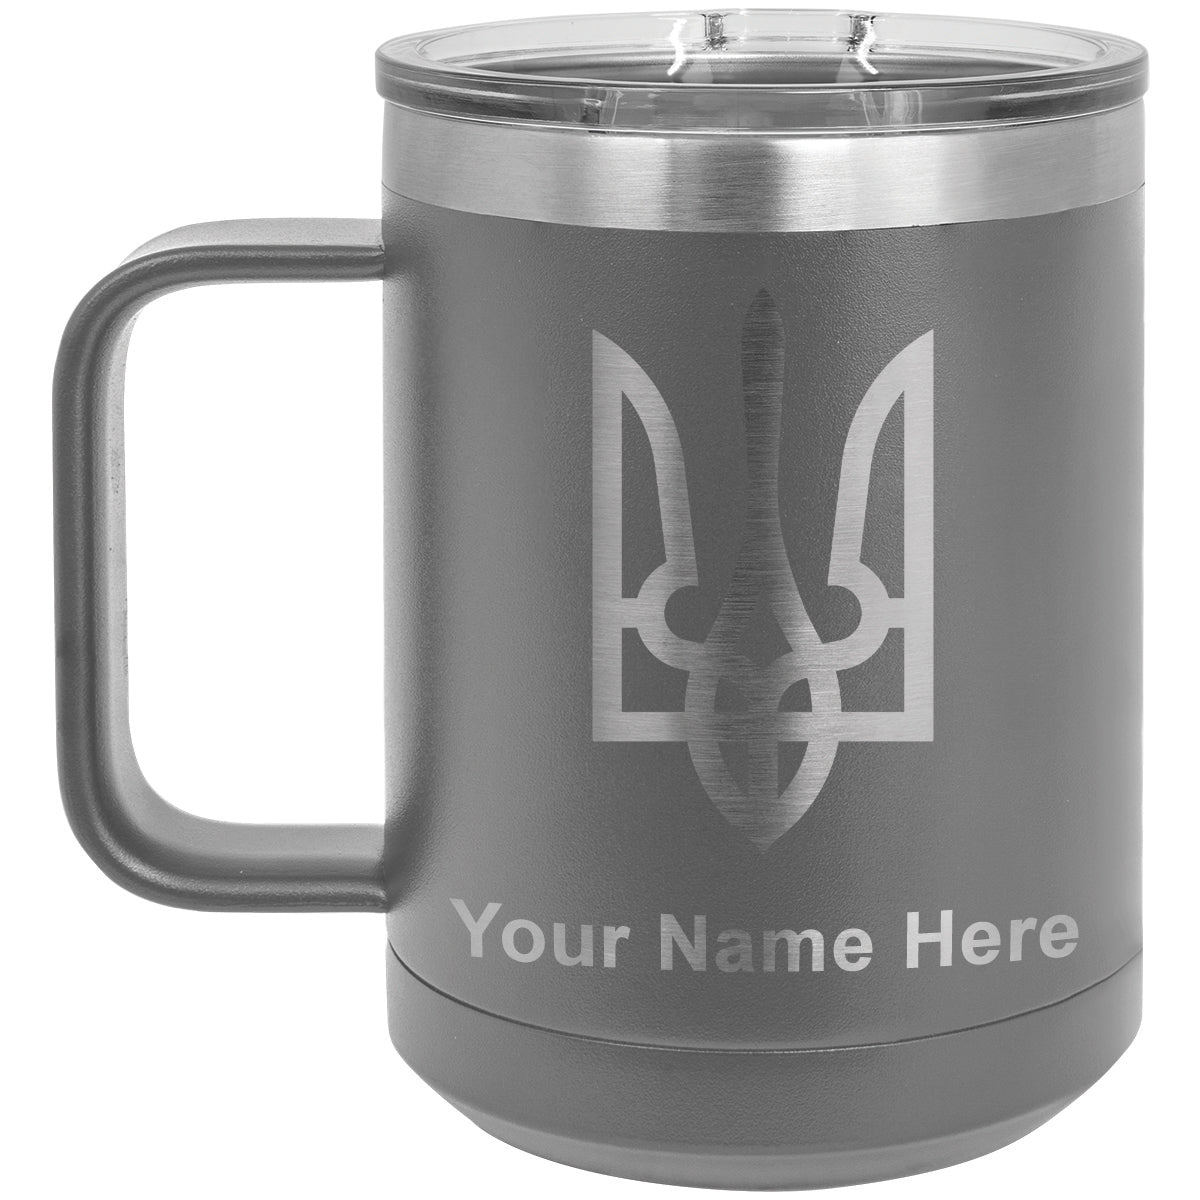 15oz Vacuum Insulated Coffee Mug, Flag of Ukraine, Personalized Engraving Included